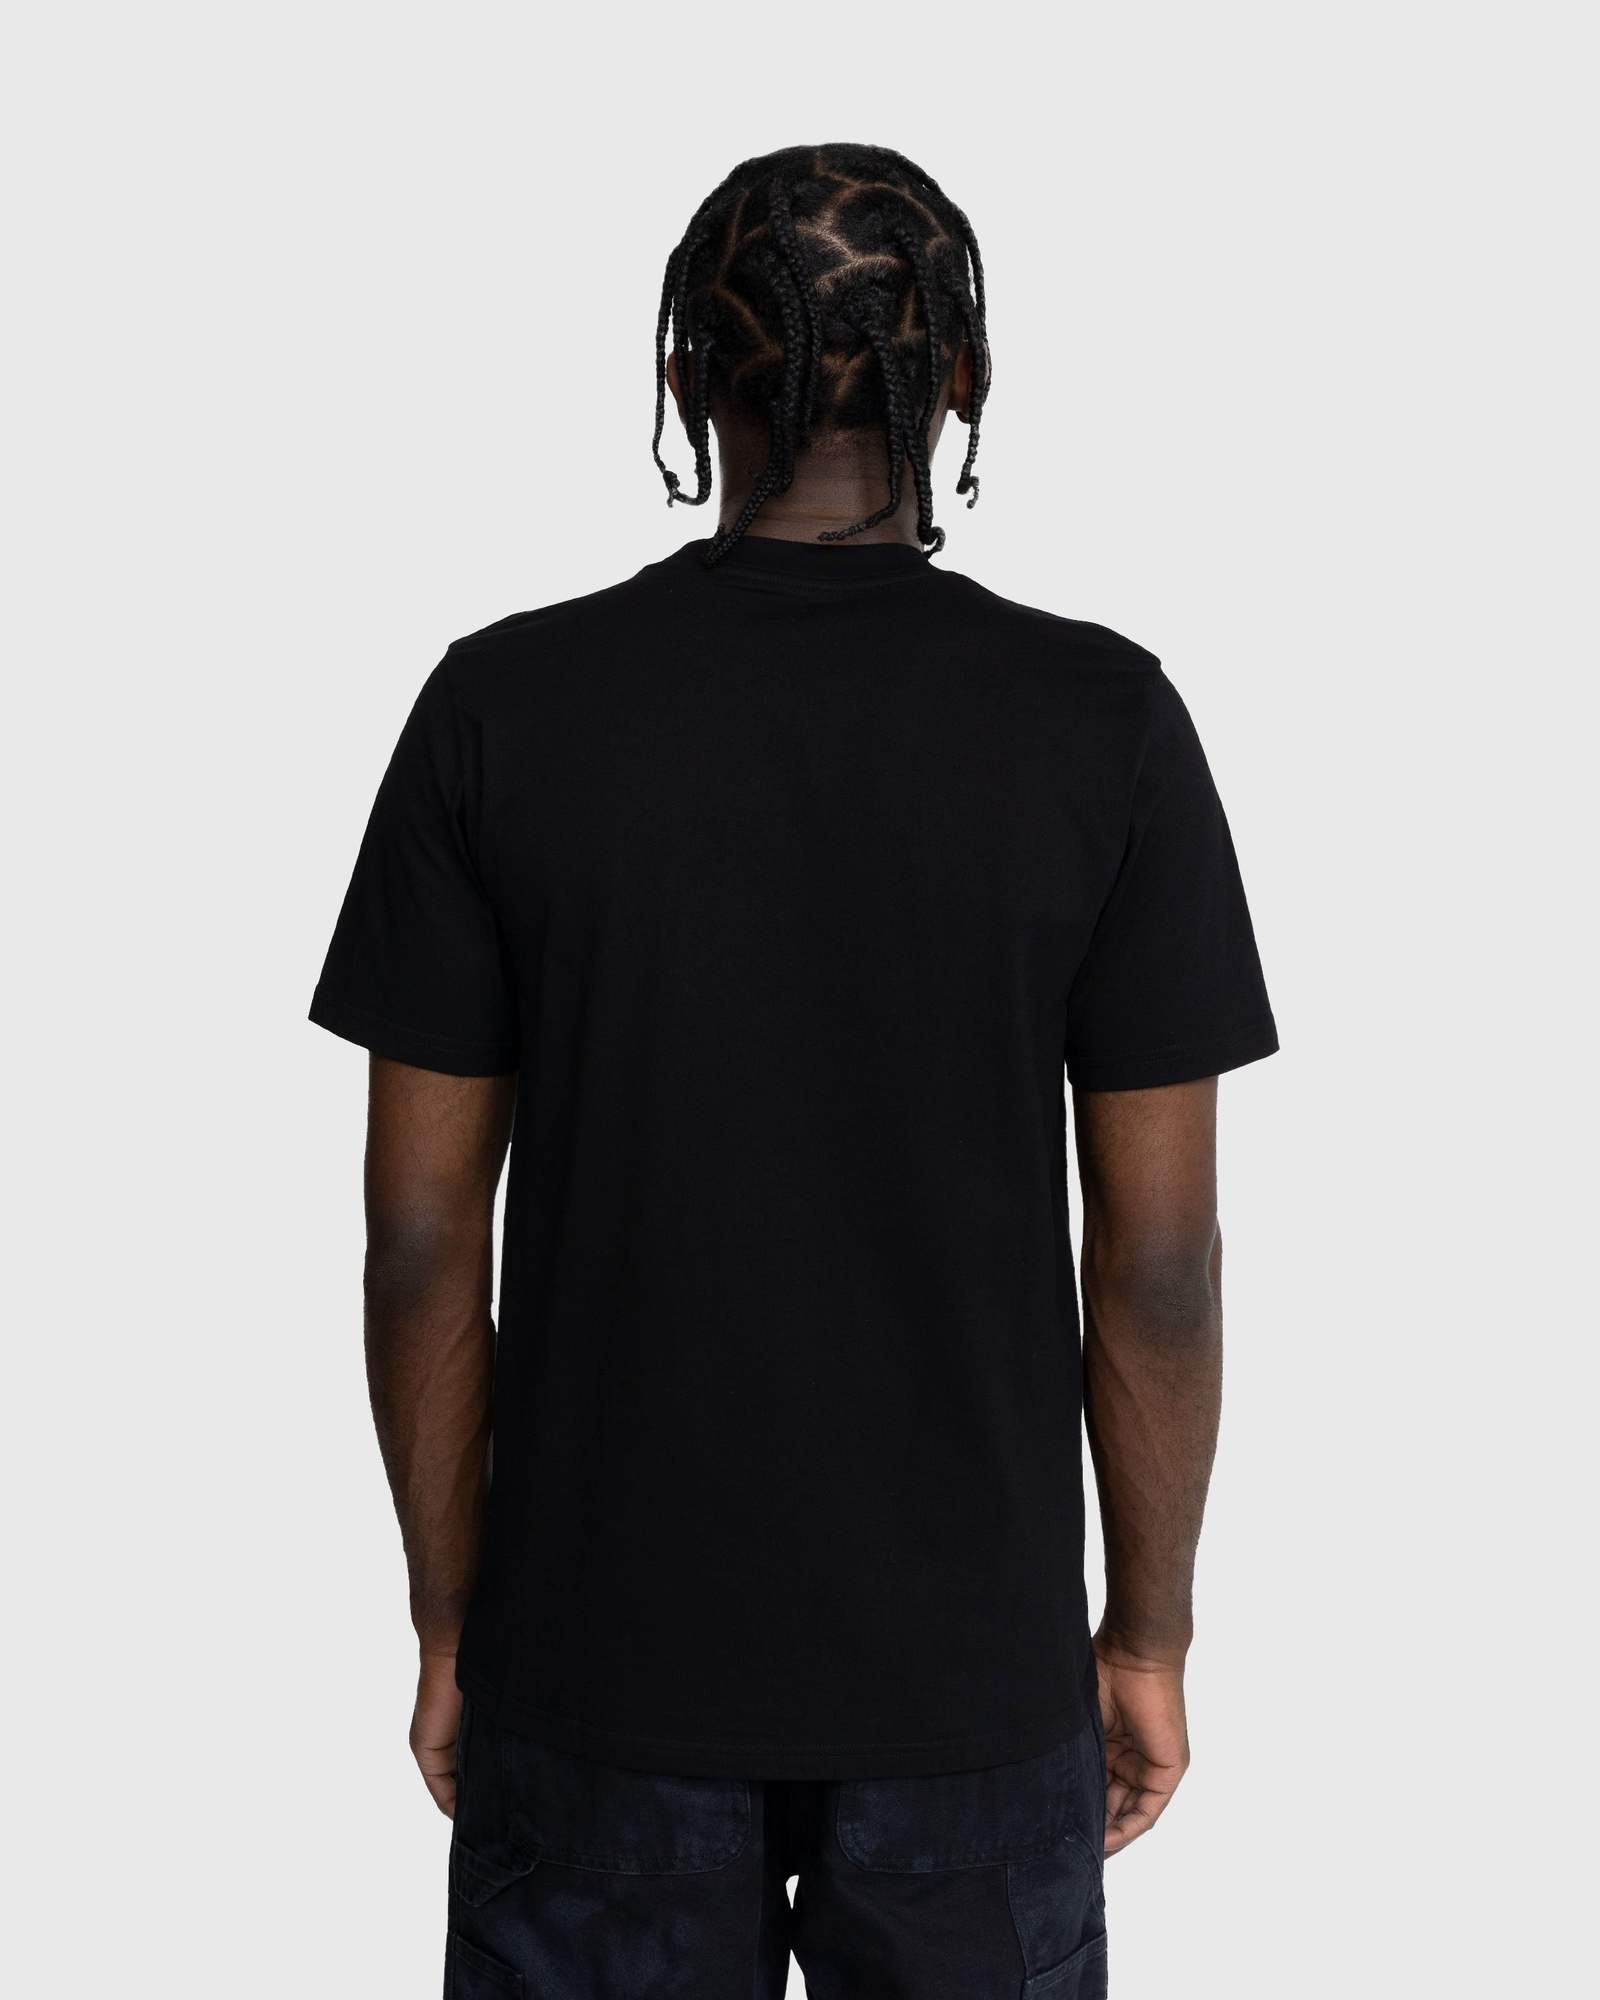 Carhartt WIP – Black Jack T-Shirt Black | Highsnobiety Shop